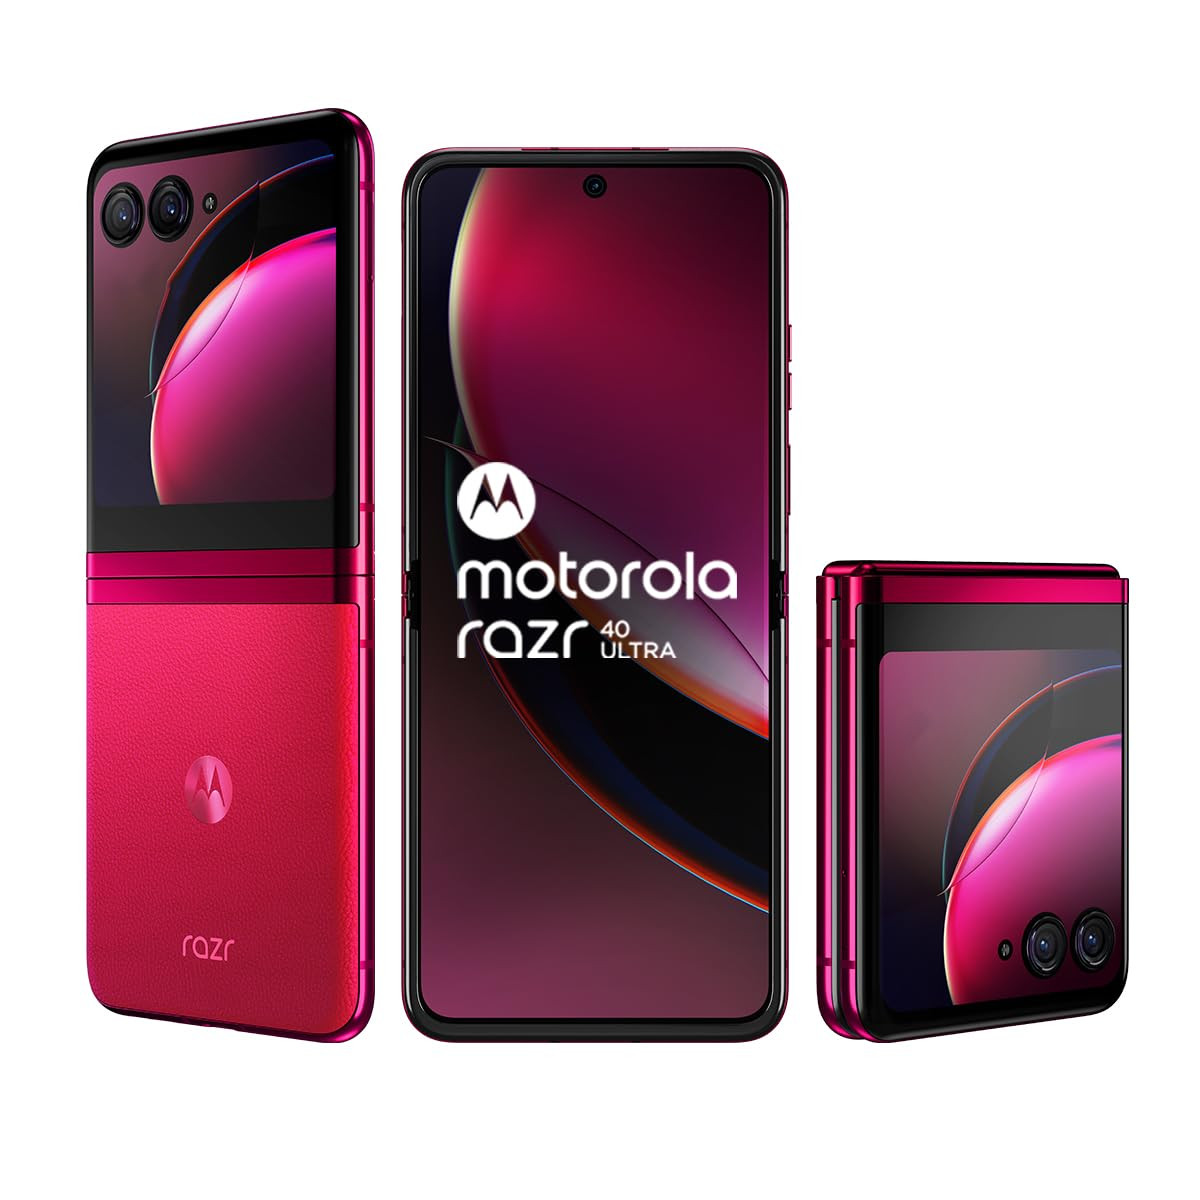 Motorola razr 40 Ultra (Viva Magenta, 8GB RAM, 256GB Storage) | 3.6